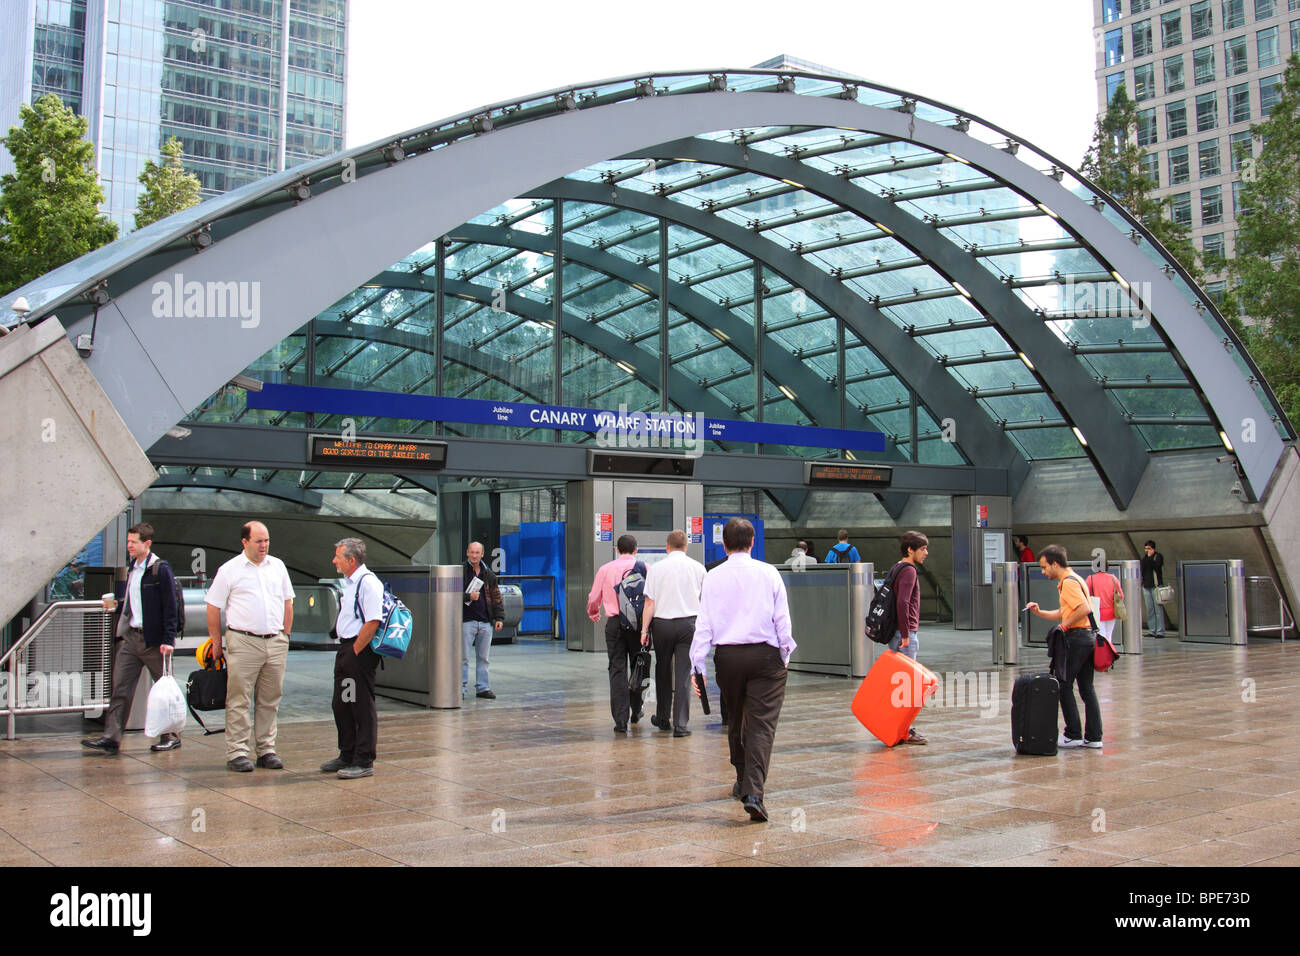 La station de métro Canary Wharf, Canary Wharf, Londres, Angleterre, Royaume-Uni Banque D'Images